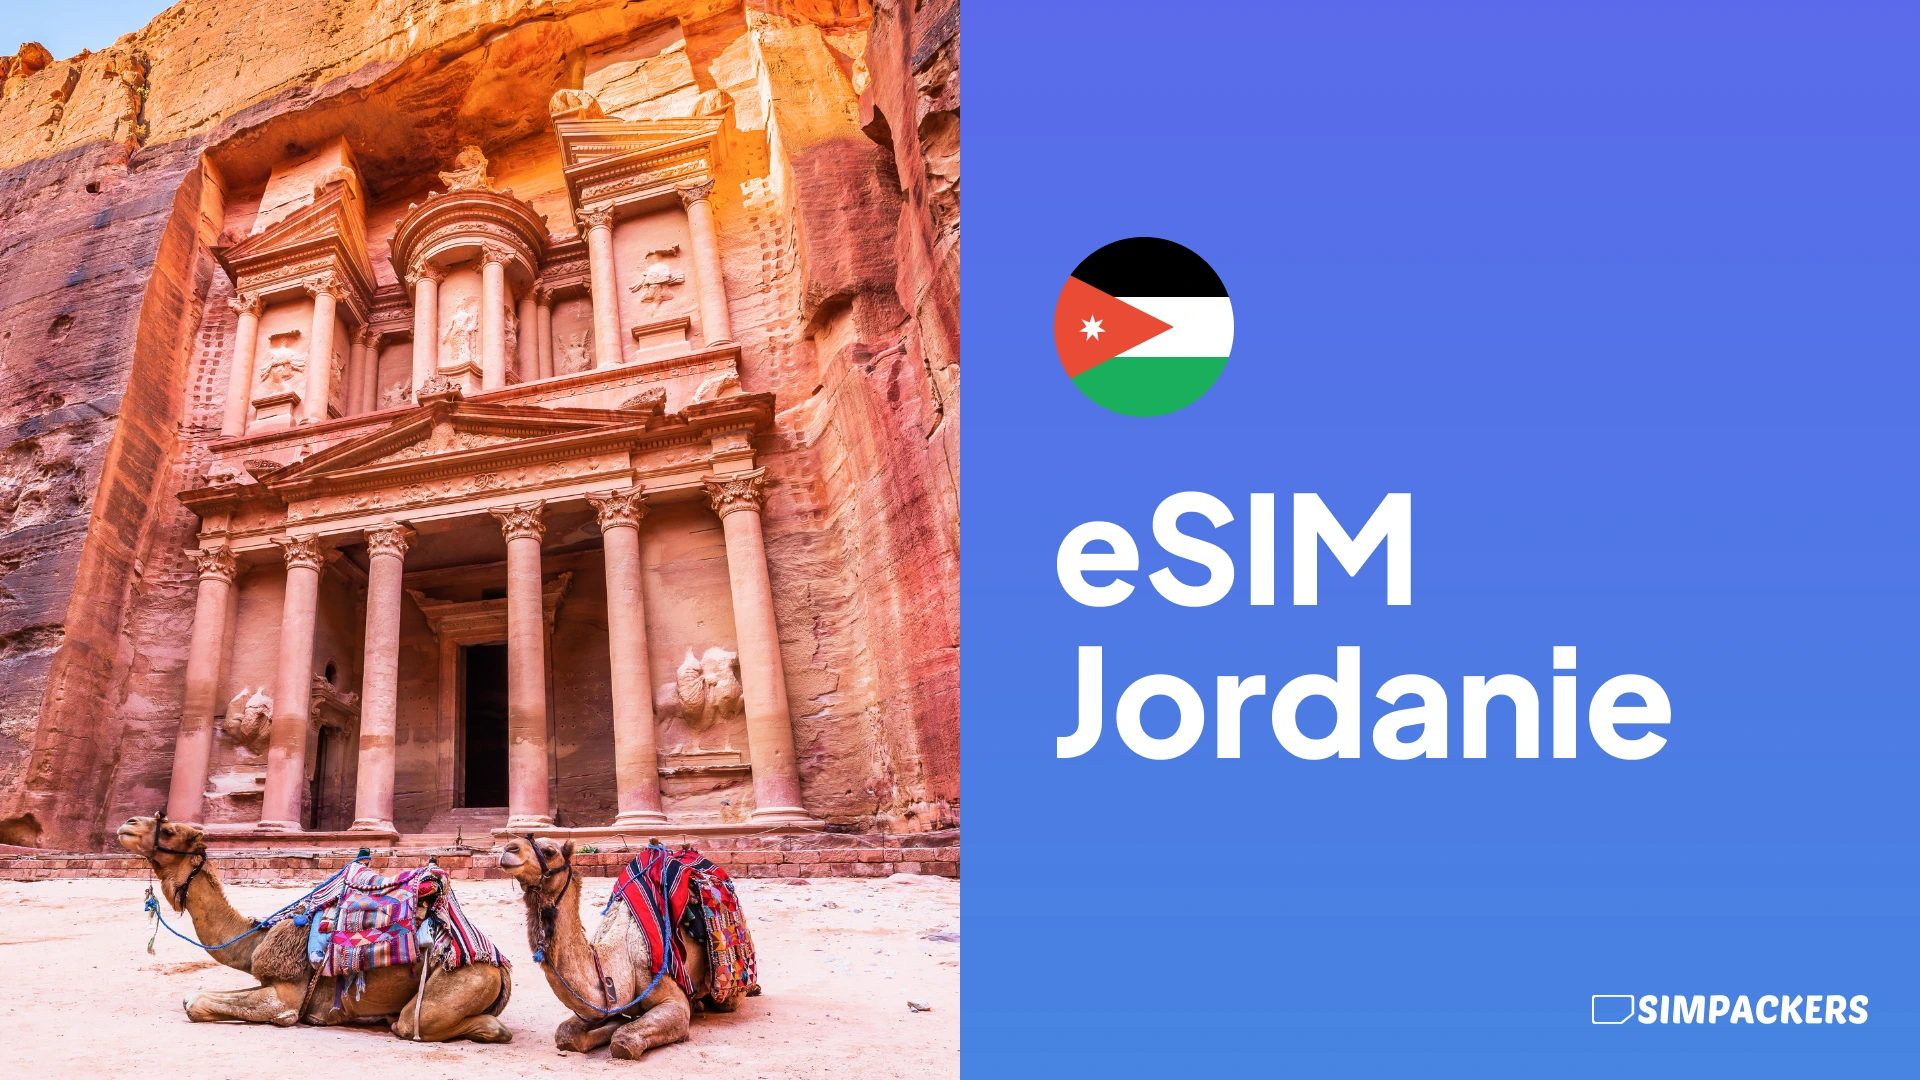 FR/FEATURED_IMAGES/esim-jordanie.webp